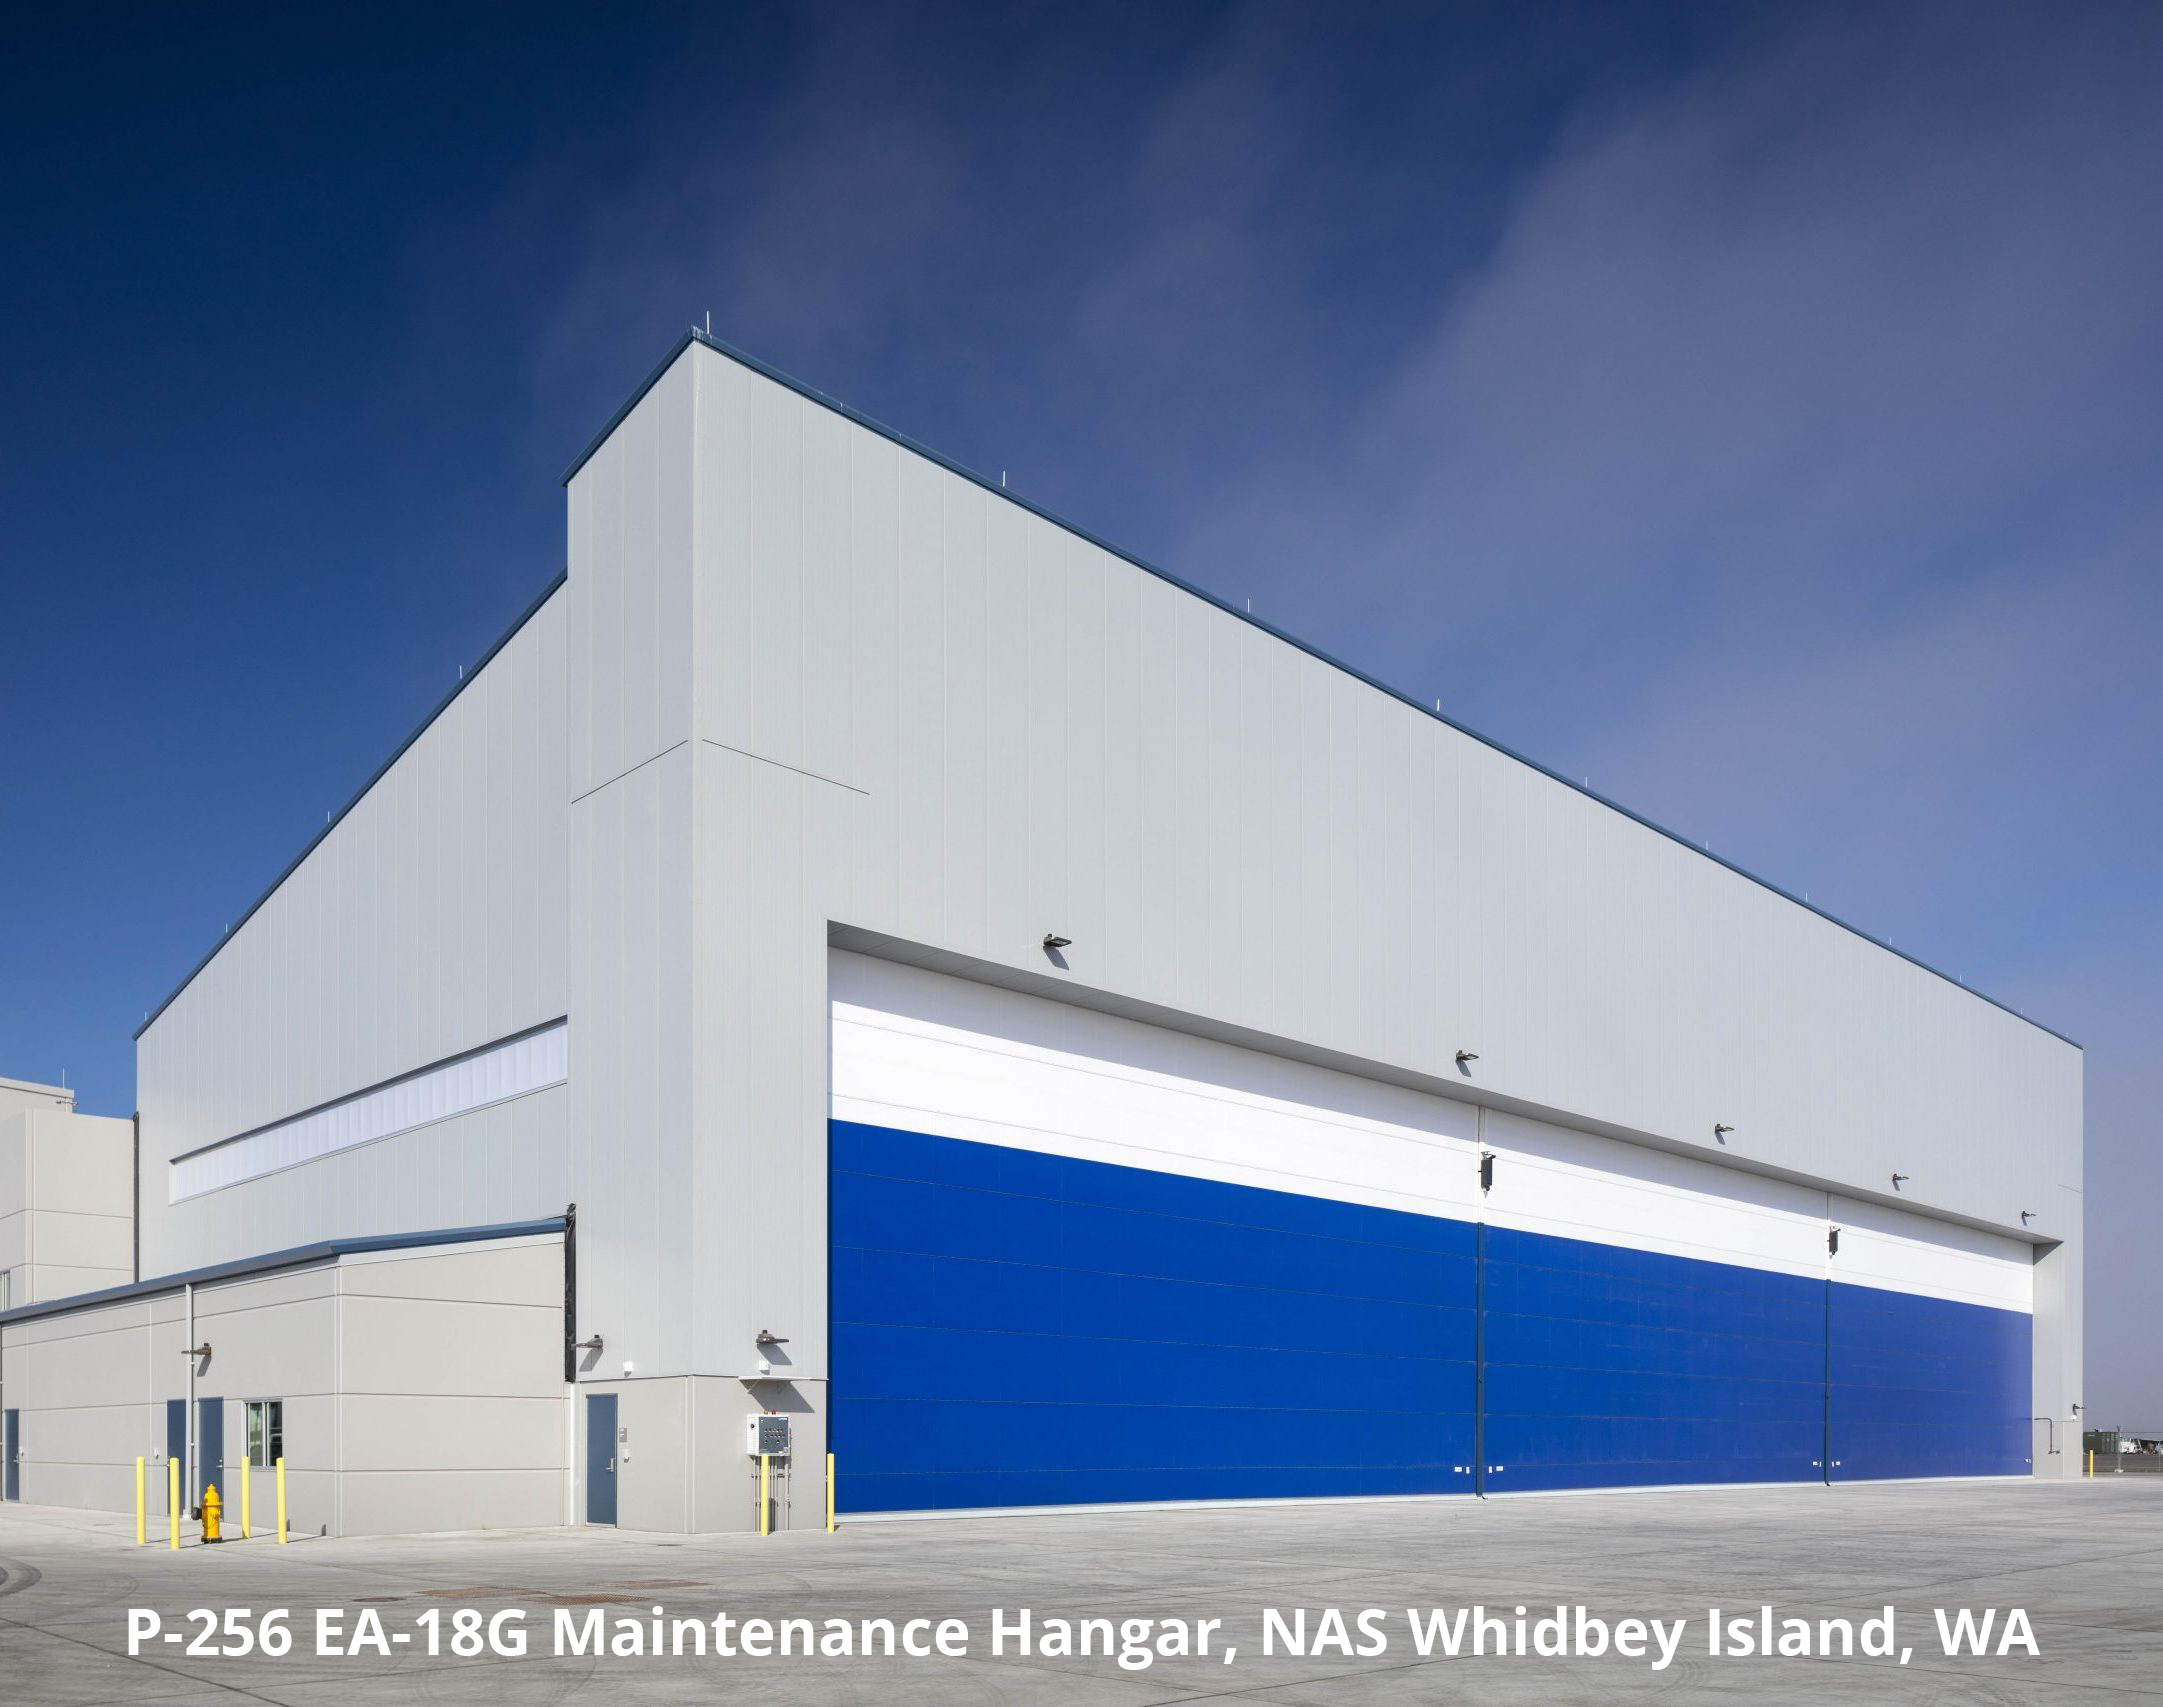 P-256 EA-18G Maintenance Hangar, NAS Whidbey Island, WA